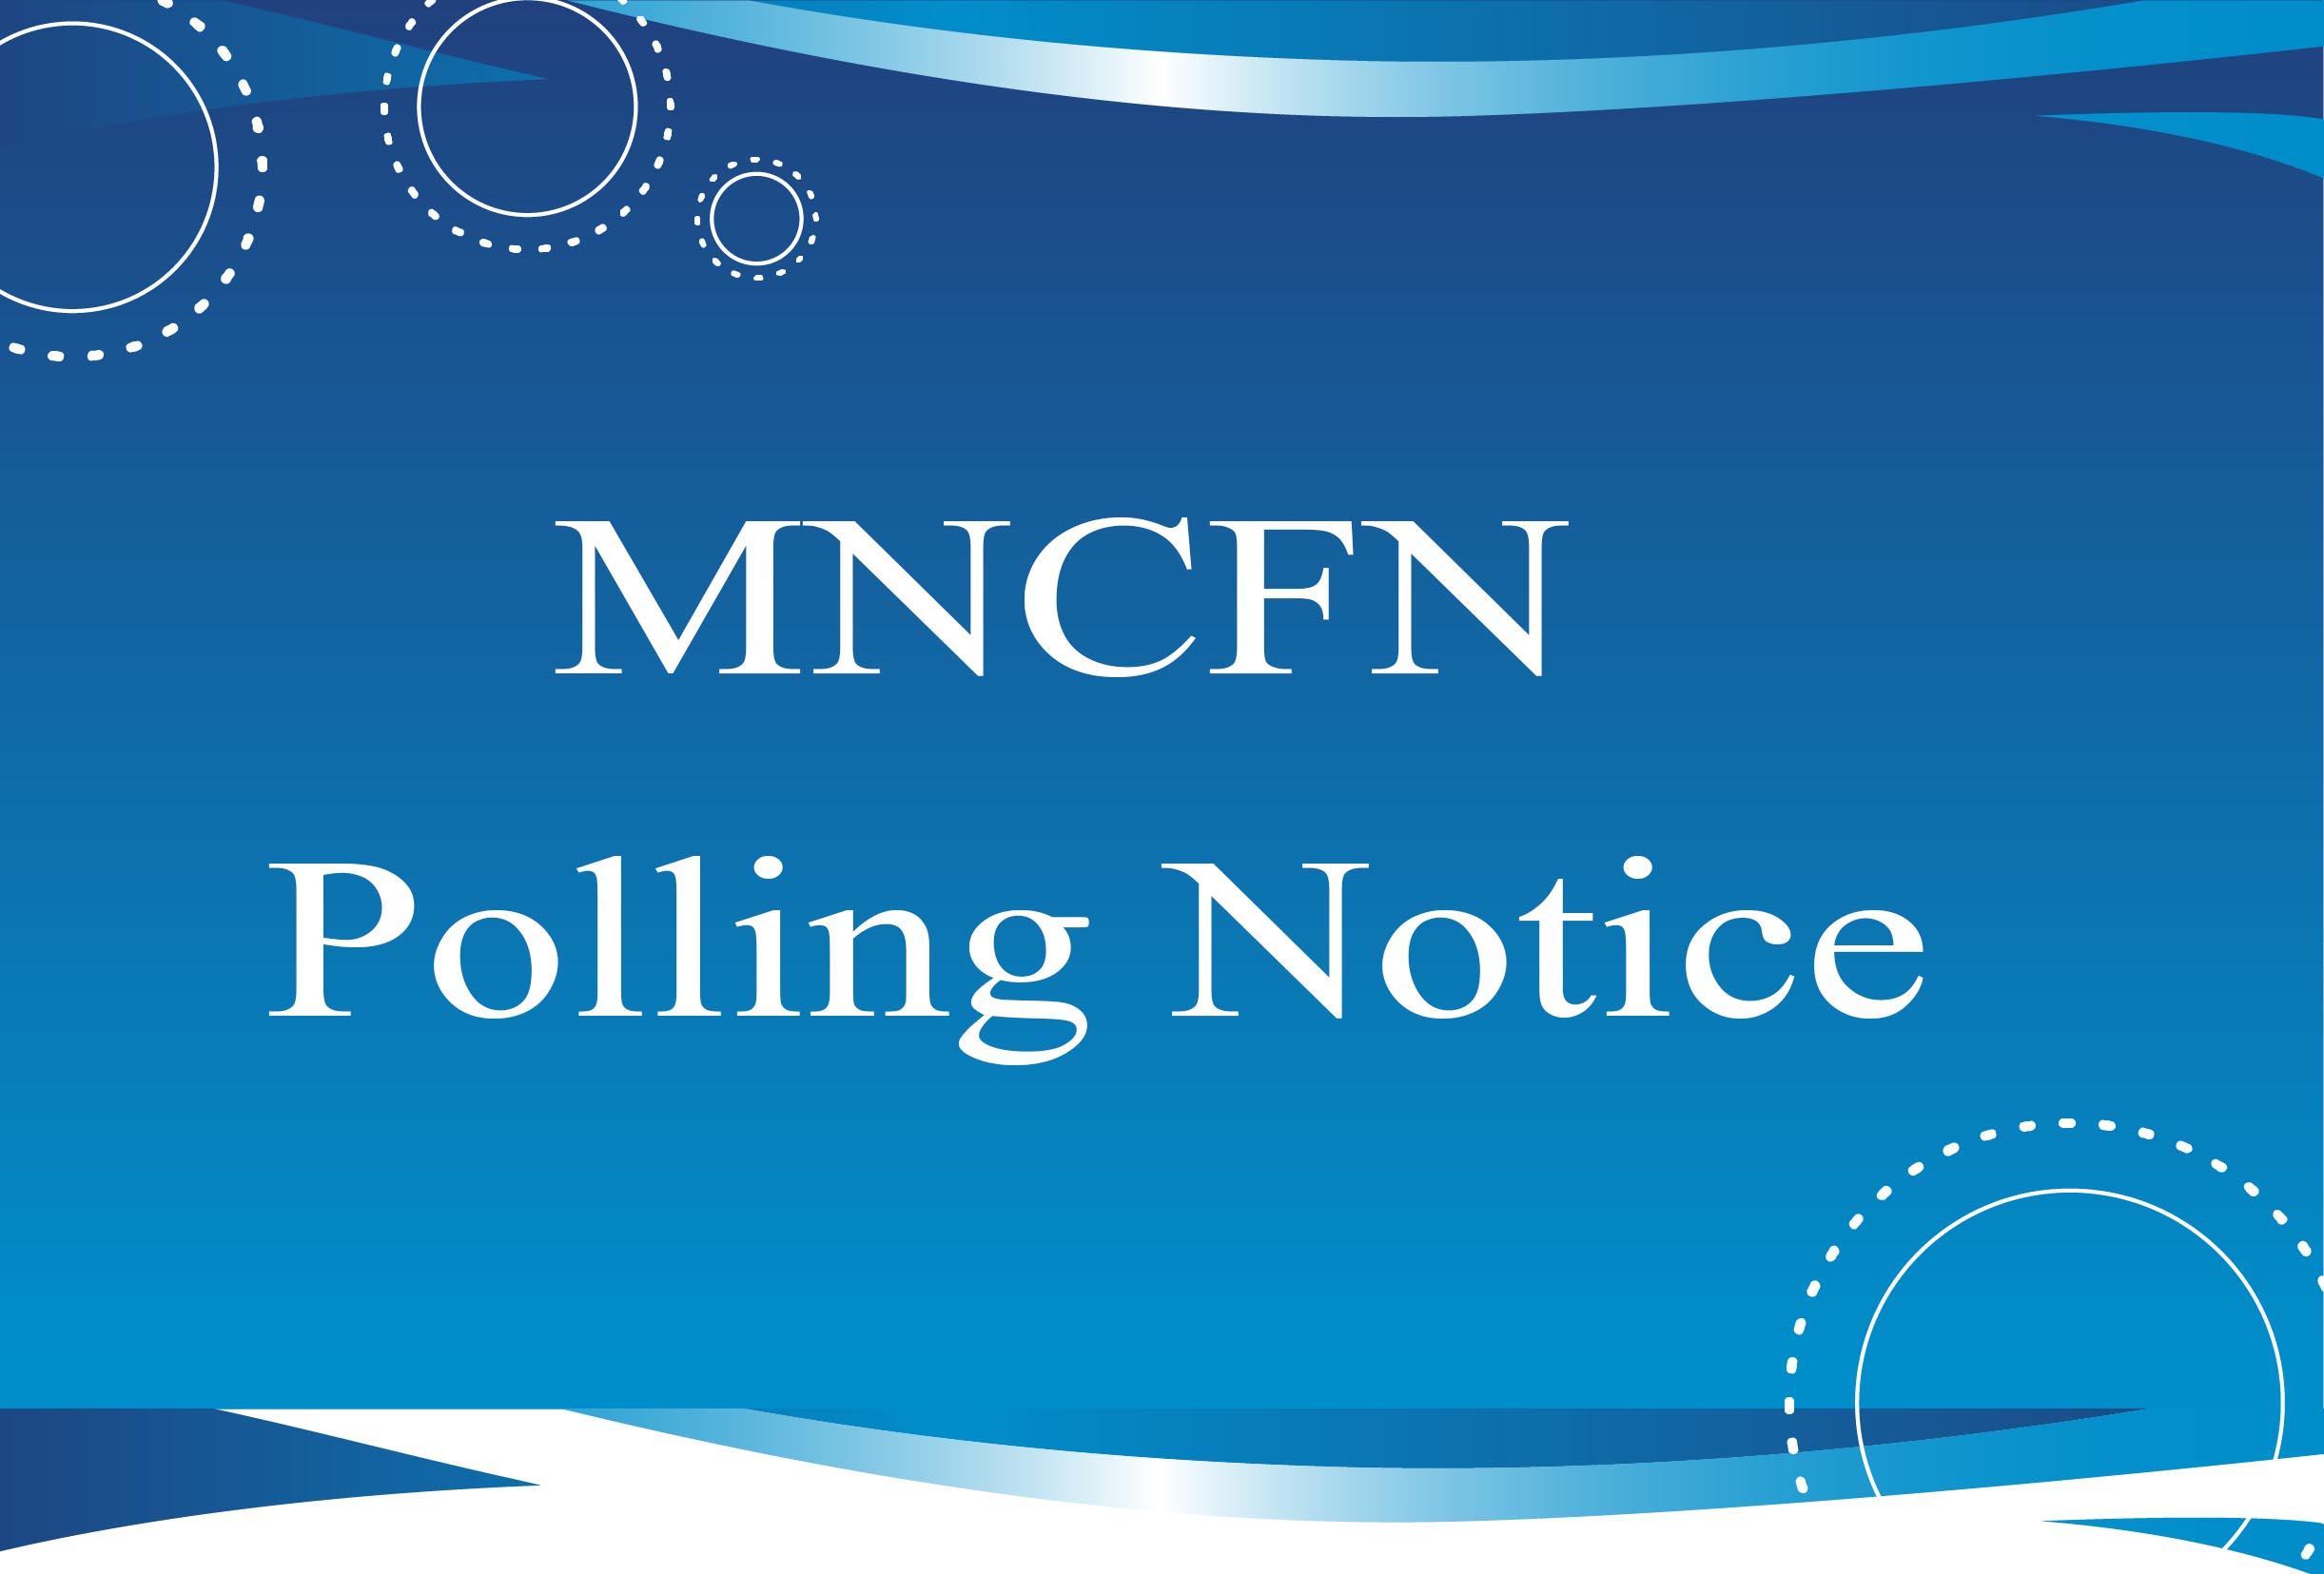 MNCFN Polling Notice